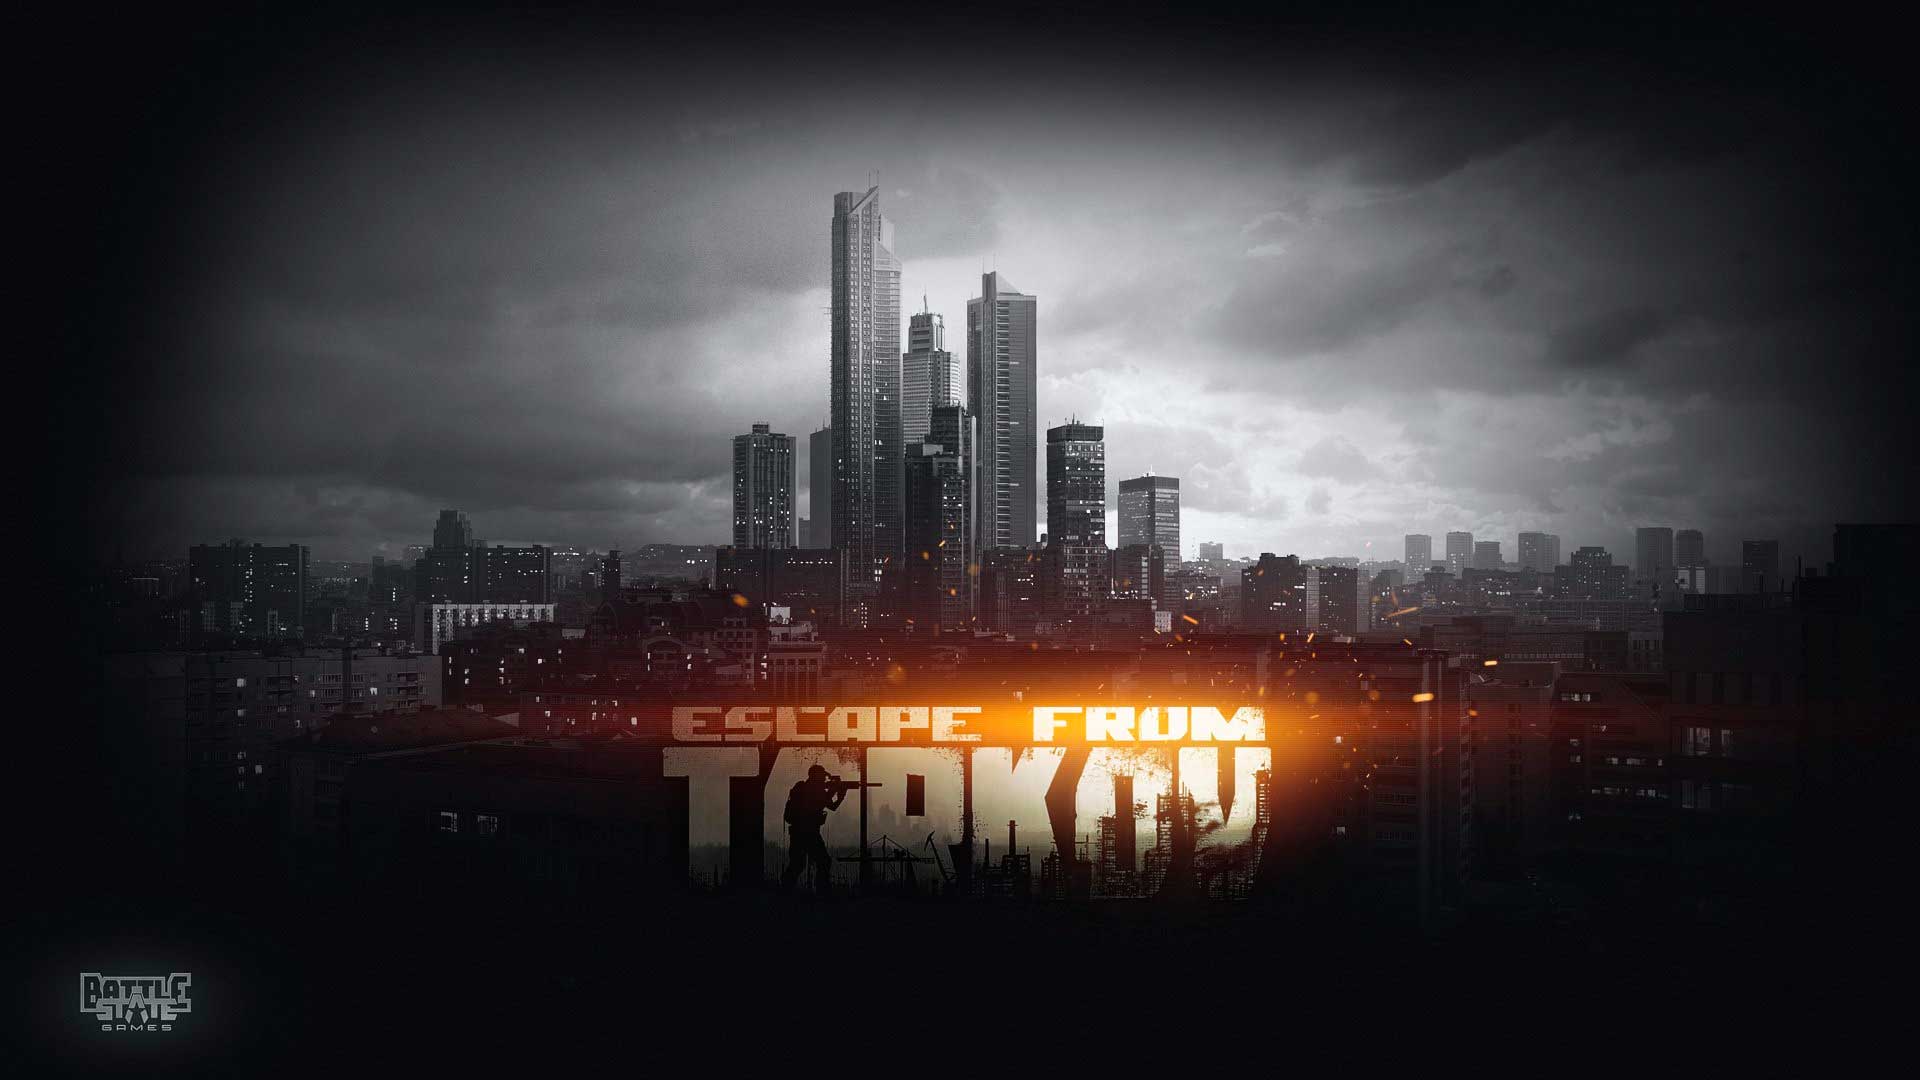 Escape from tarkov logo - seniorzik